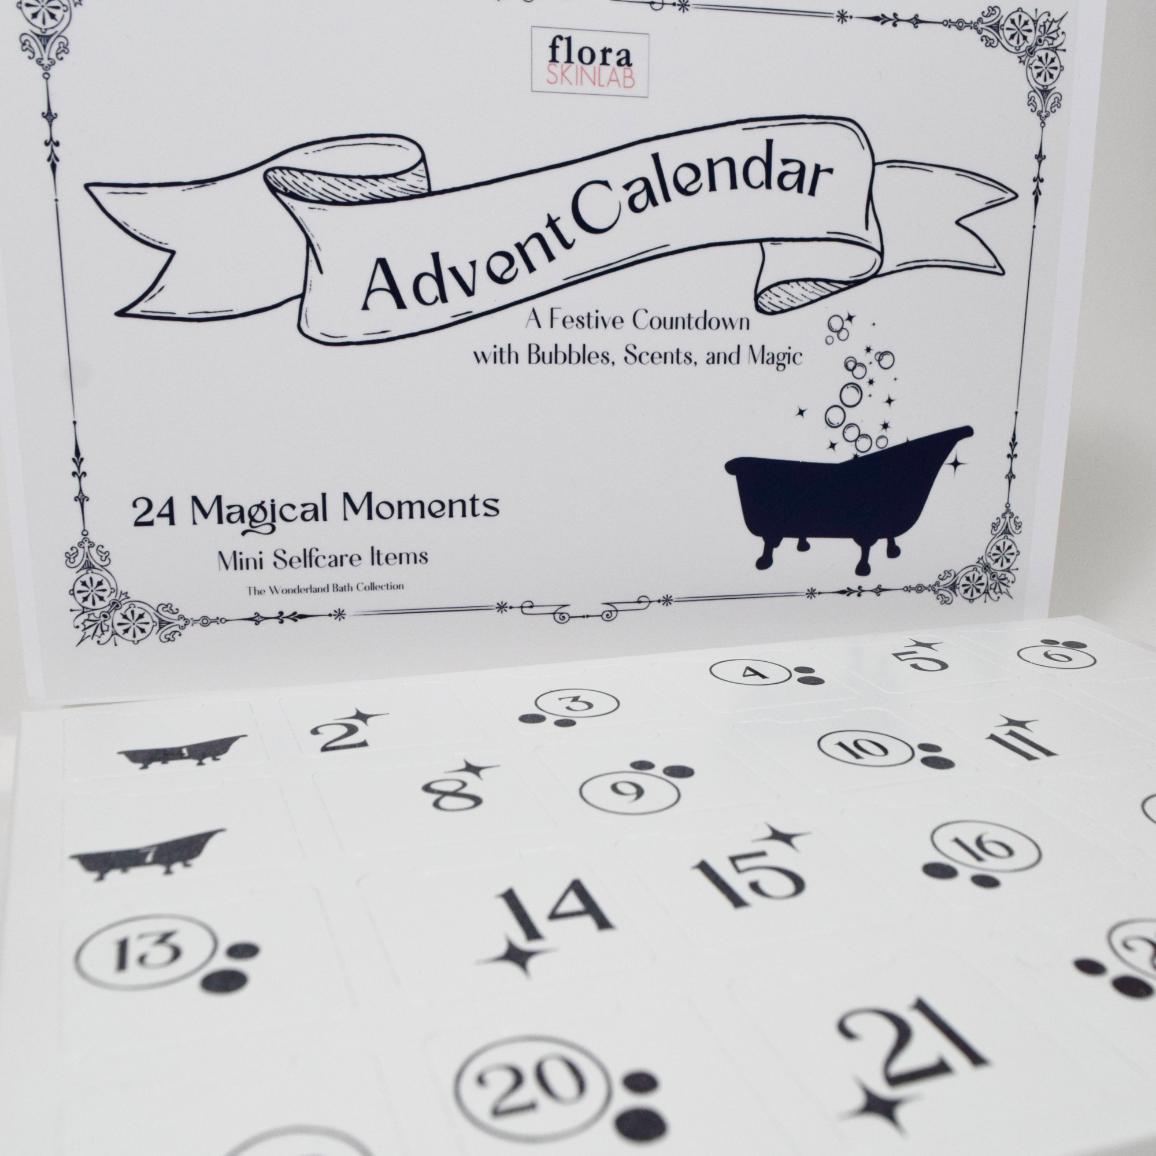 Wonderland Bath Advent Calendar A Festive Countdown with Bubbles, Scents, and Magic